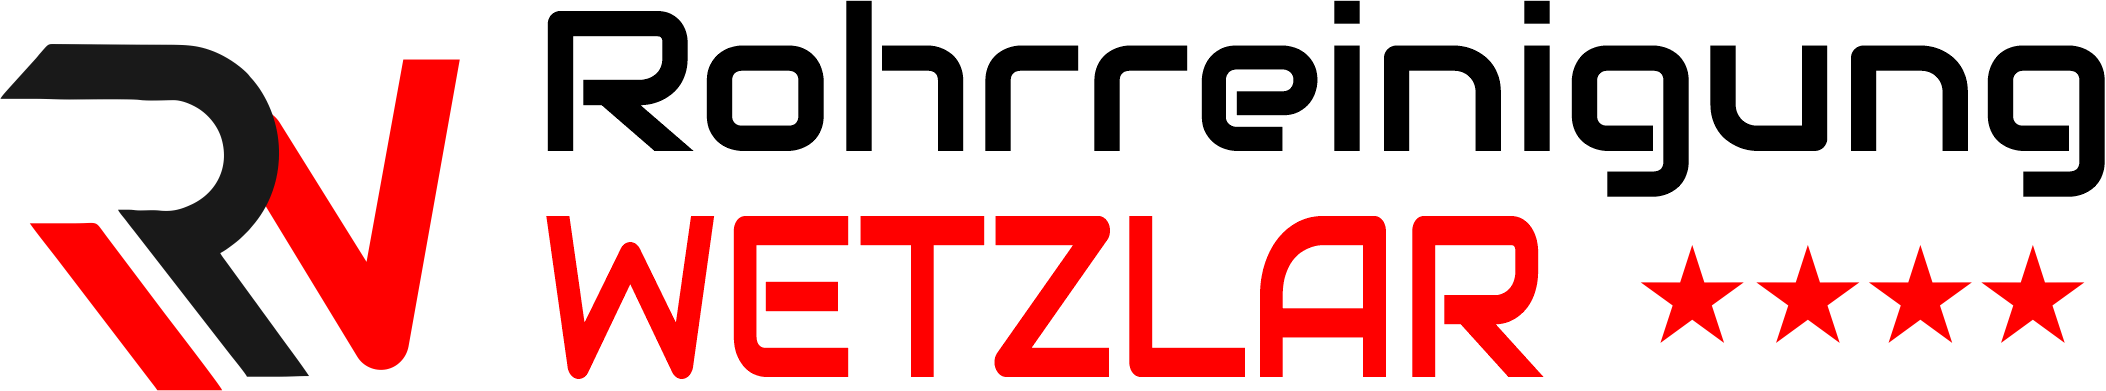 Rohrreinigung Wetzlar Logo